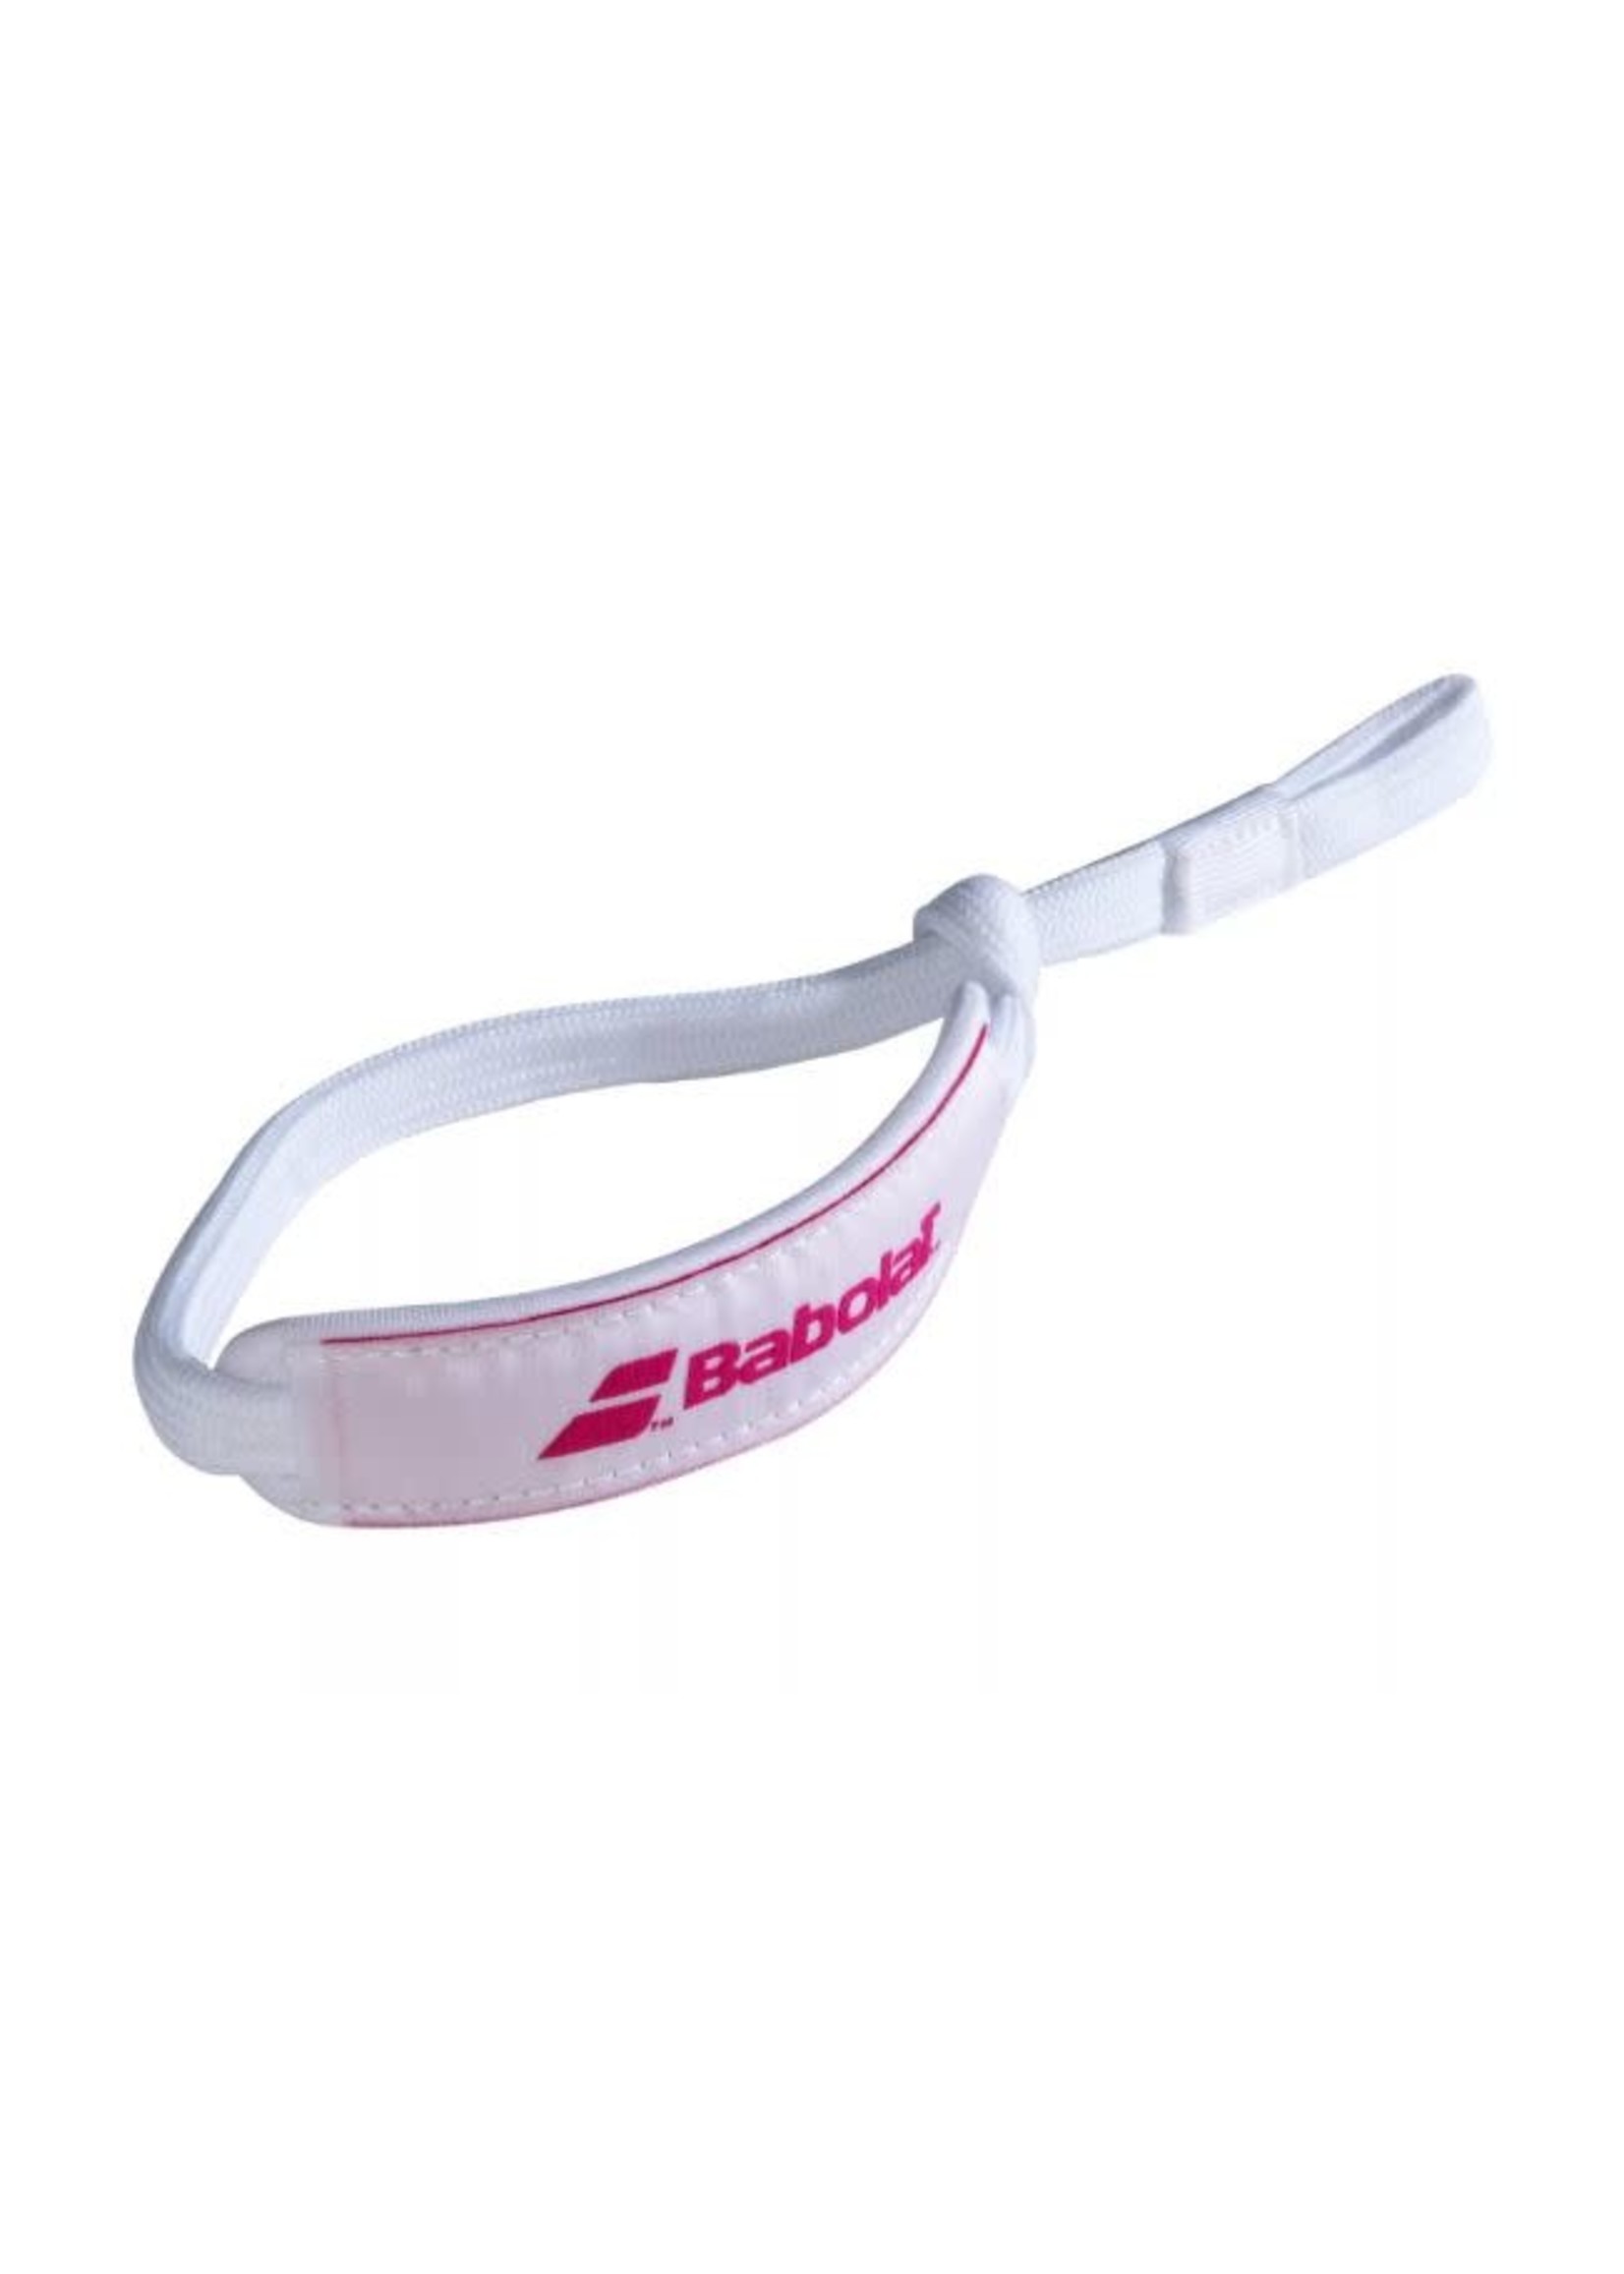 Babolat Wrist Strap (white pink)